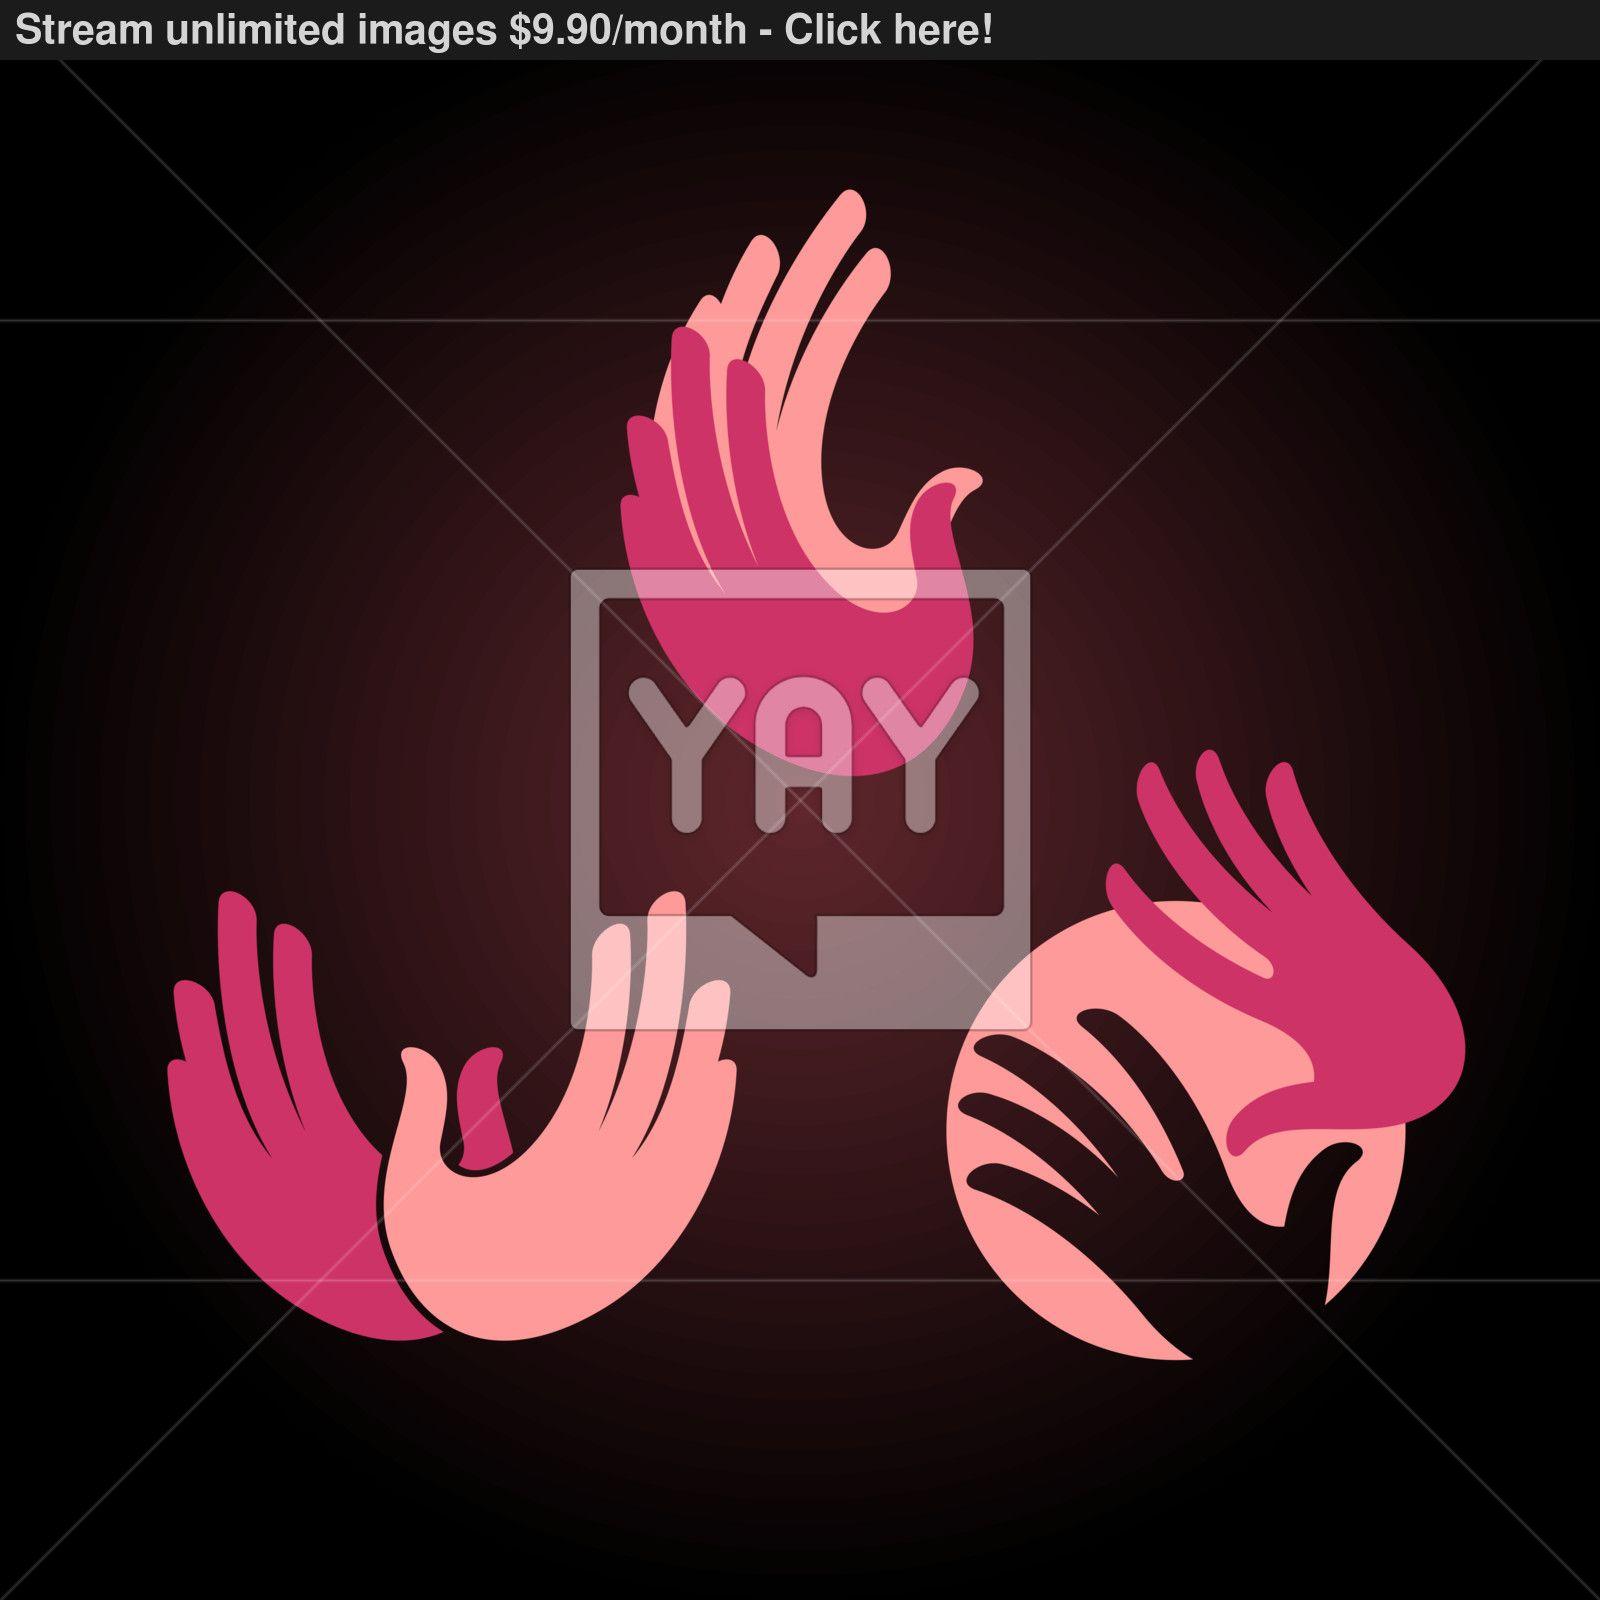 Pink Hands Logo - Hands logo elements vector | YayImages.com